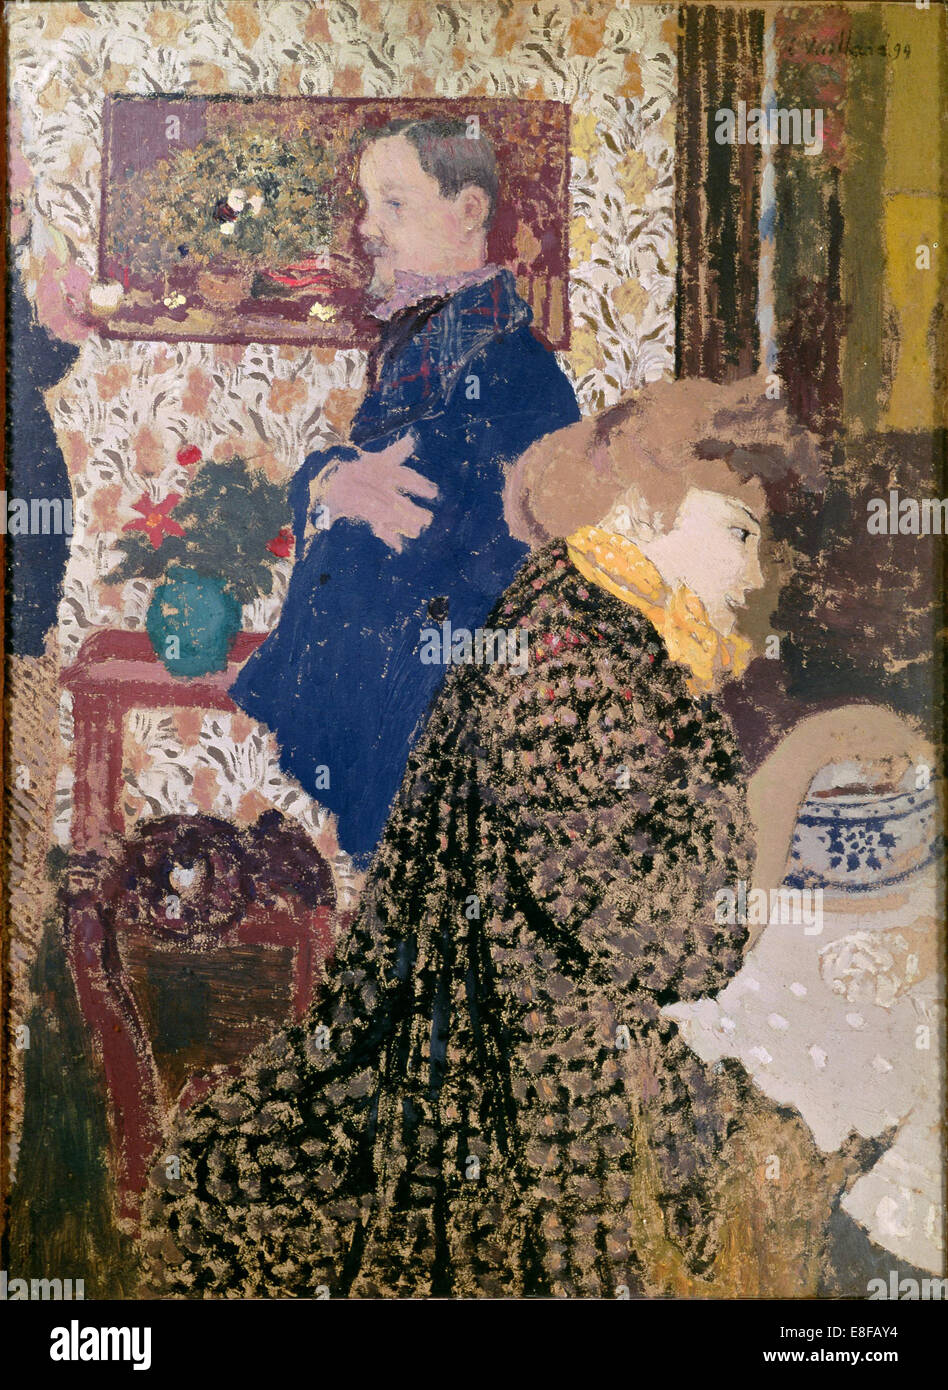 Vallotton and Misia in the Dining Room at Rue Saint-Florentin. Artist: Vuillard, Édouard (1868-1940) Stock Photo